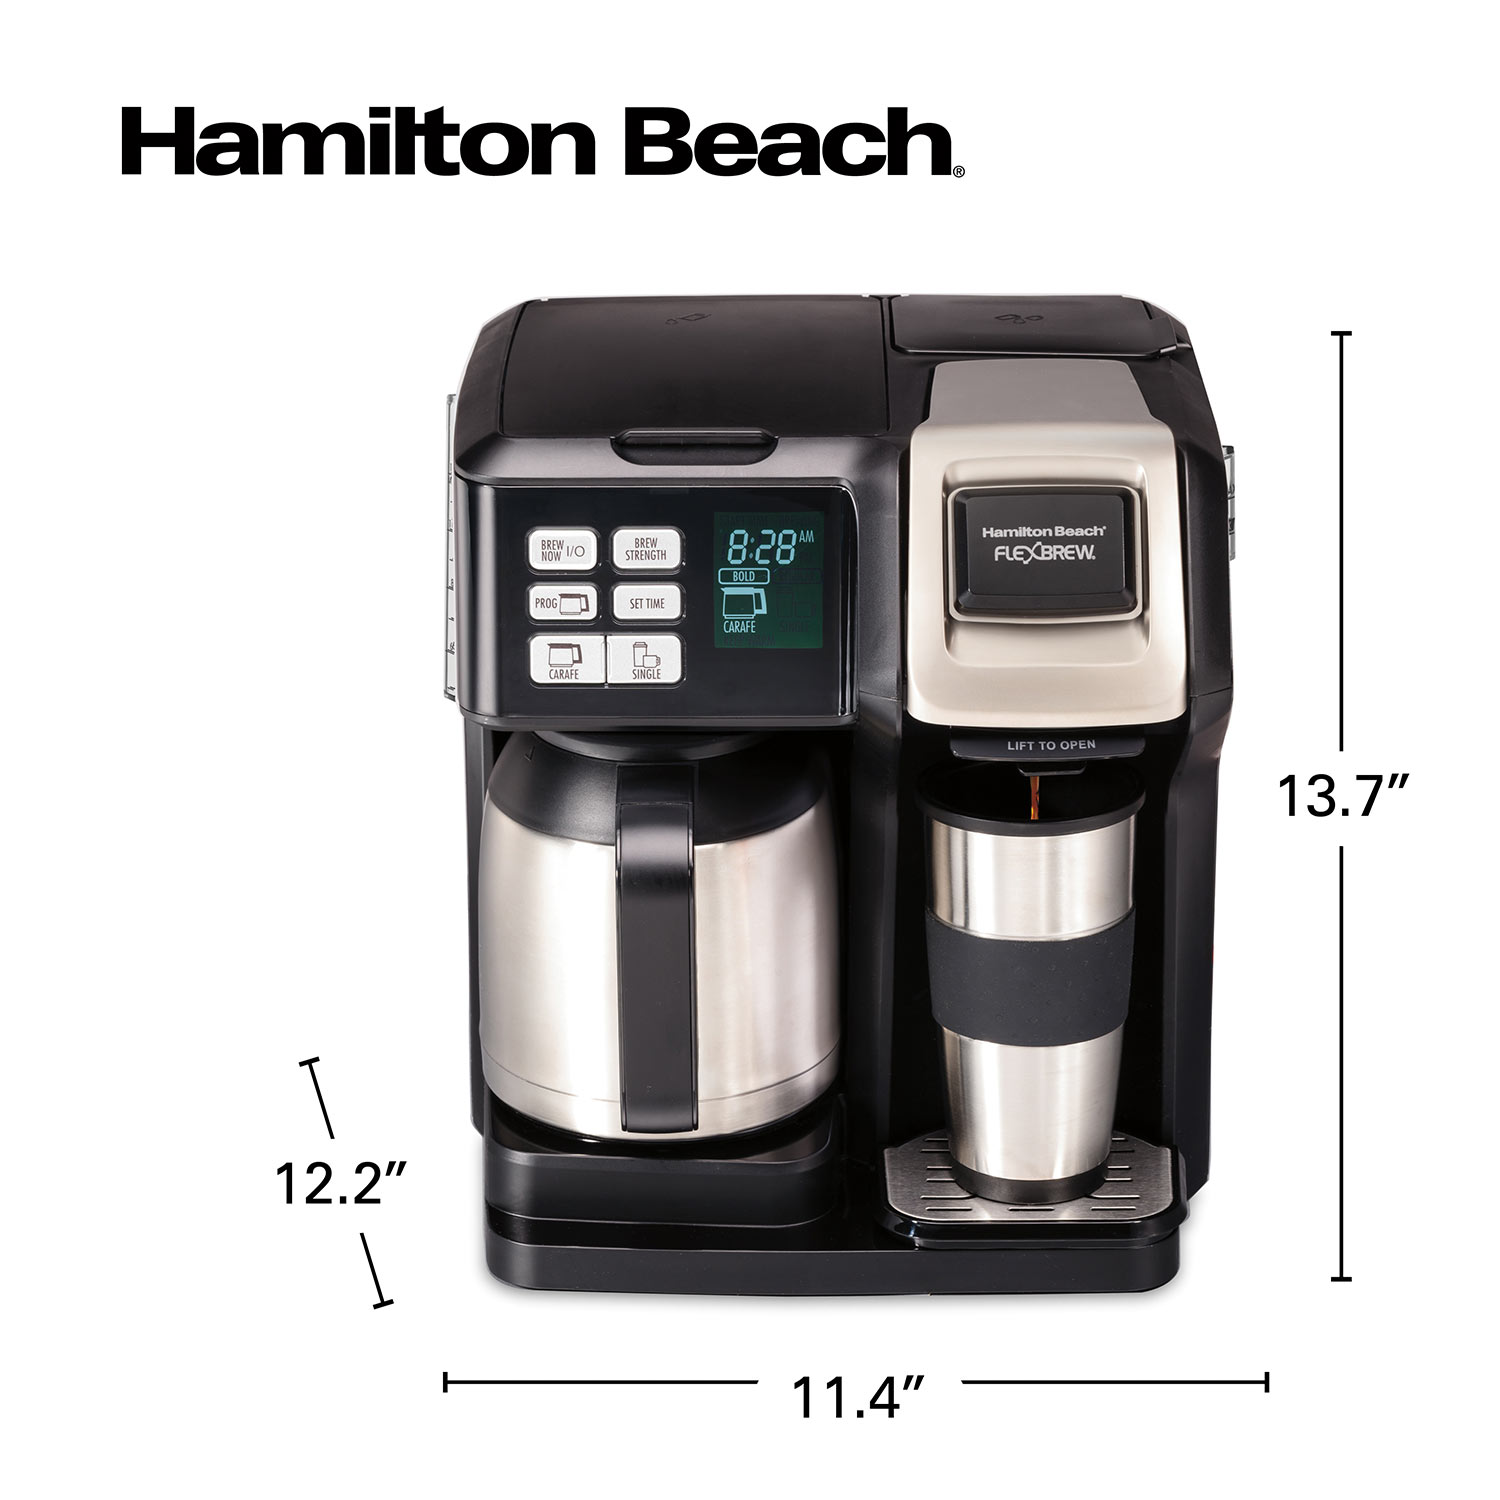 Hamilton Beach FlexBrew 2-Way Black Stainless Coffee Maker